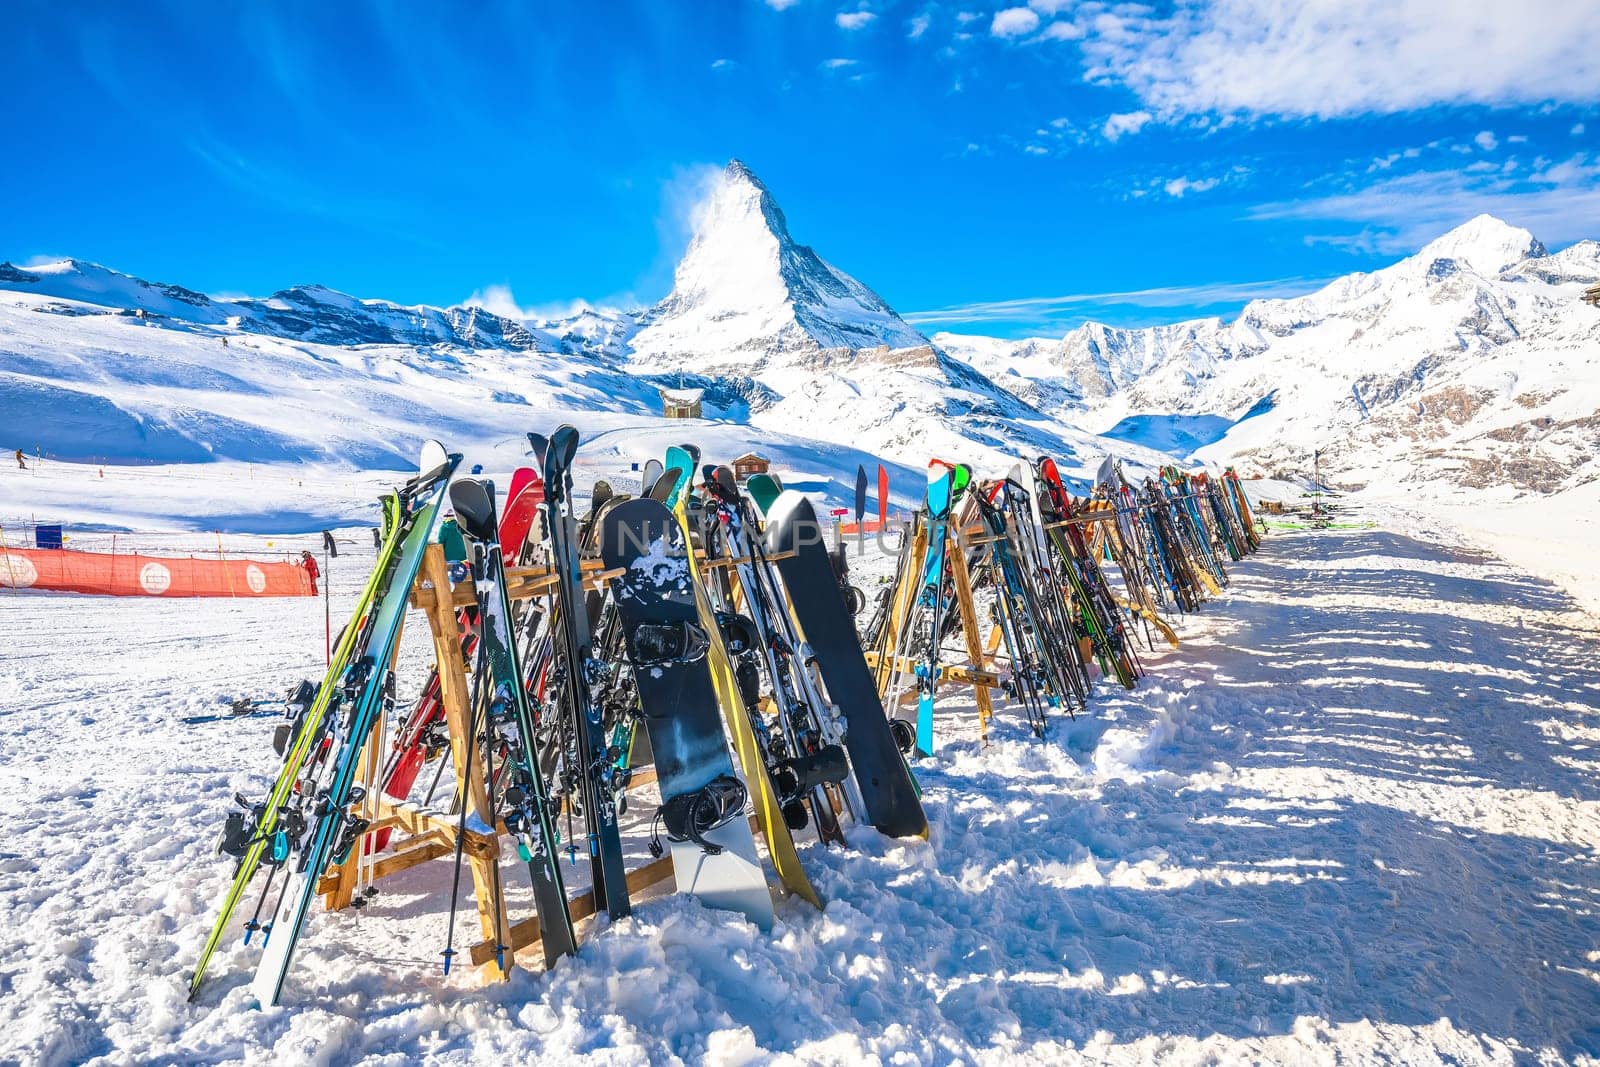 Matterhorn peak ski area in Zermatt, Valais region in Switzerland Alps